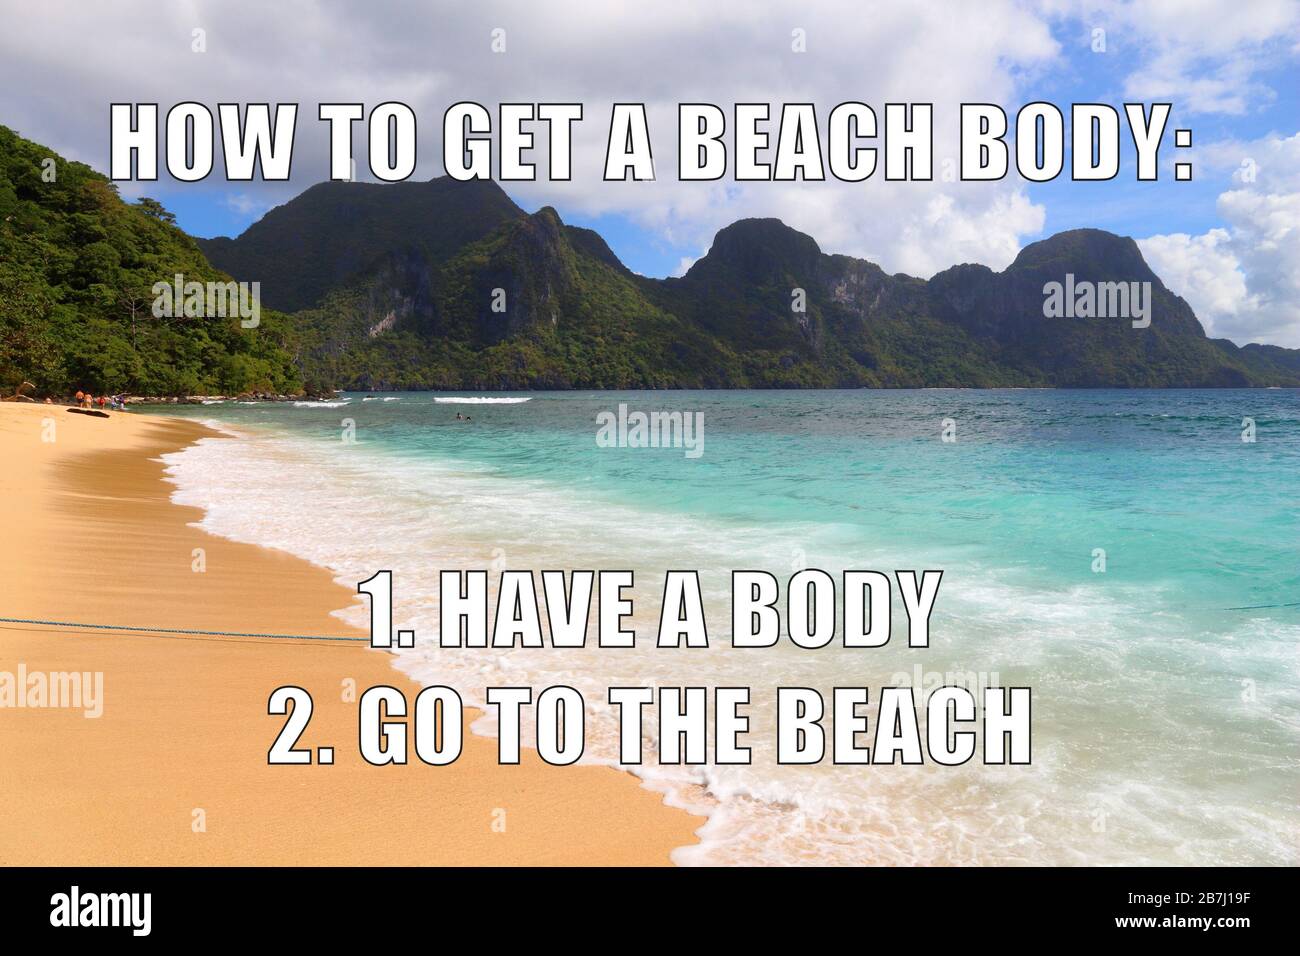 Beach Body Funny Meme For Social Media Sharing Vacation Memes Stock Photo Alamy